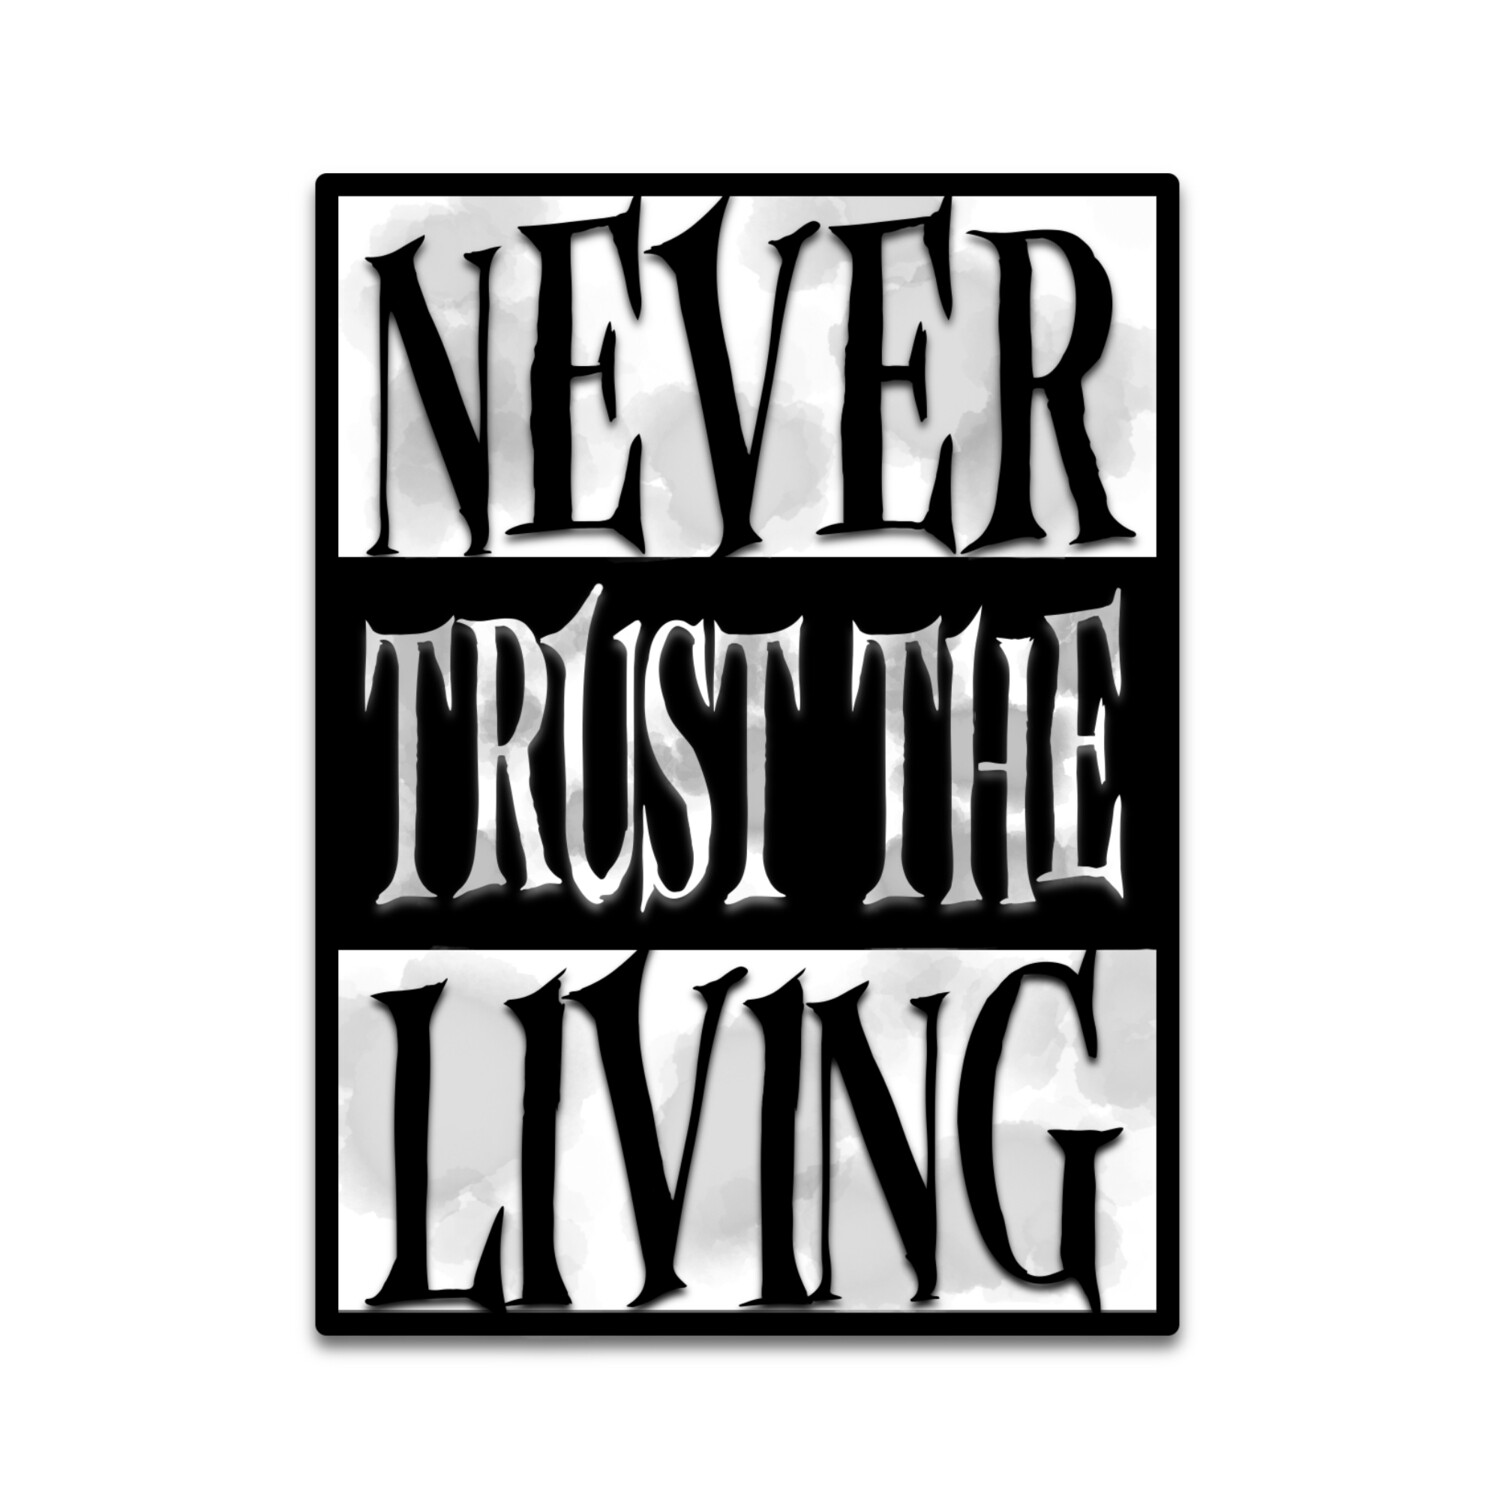 Never Trust the Living Sticker